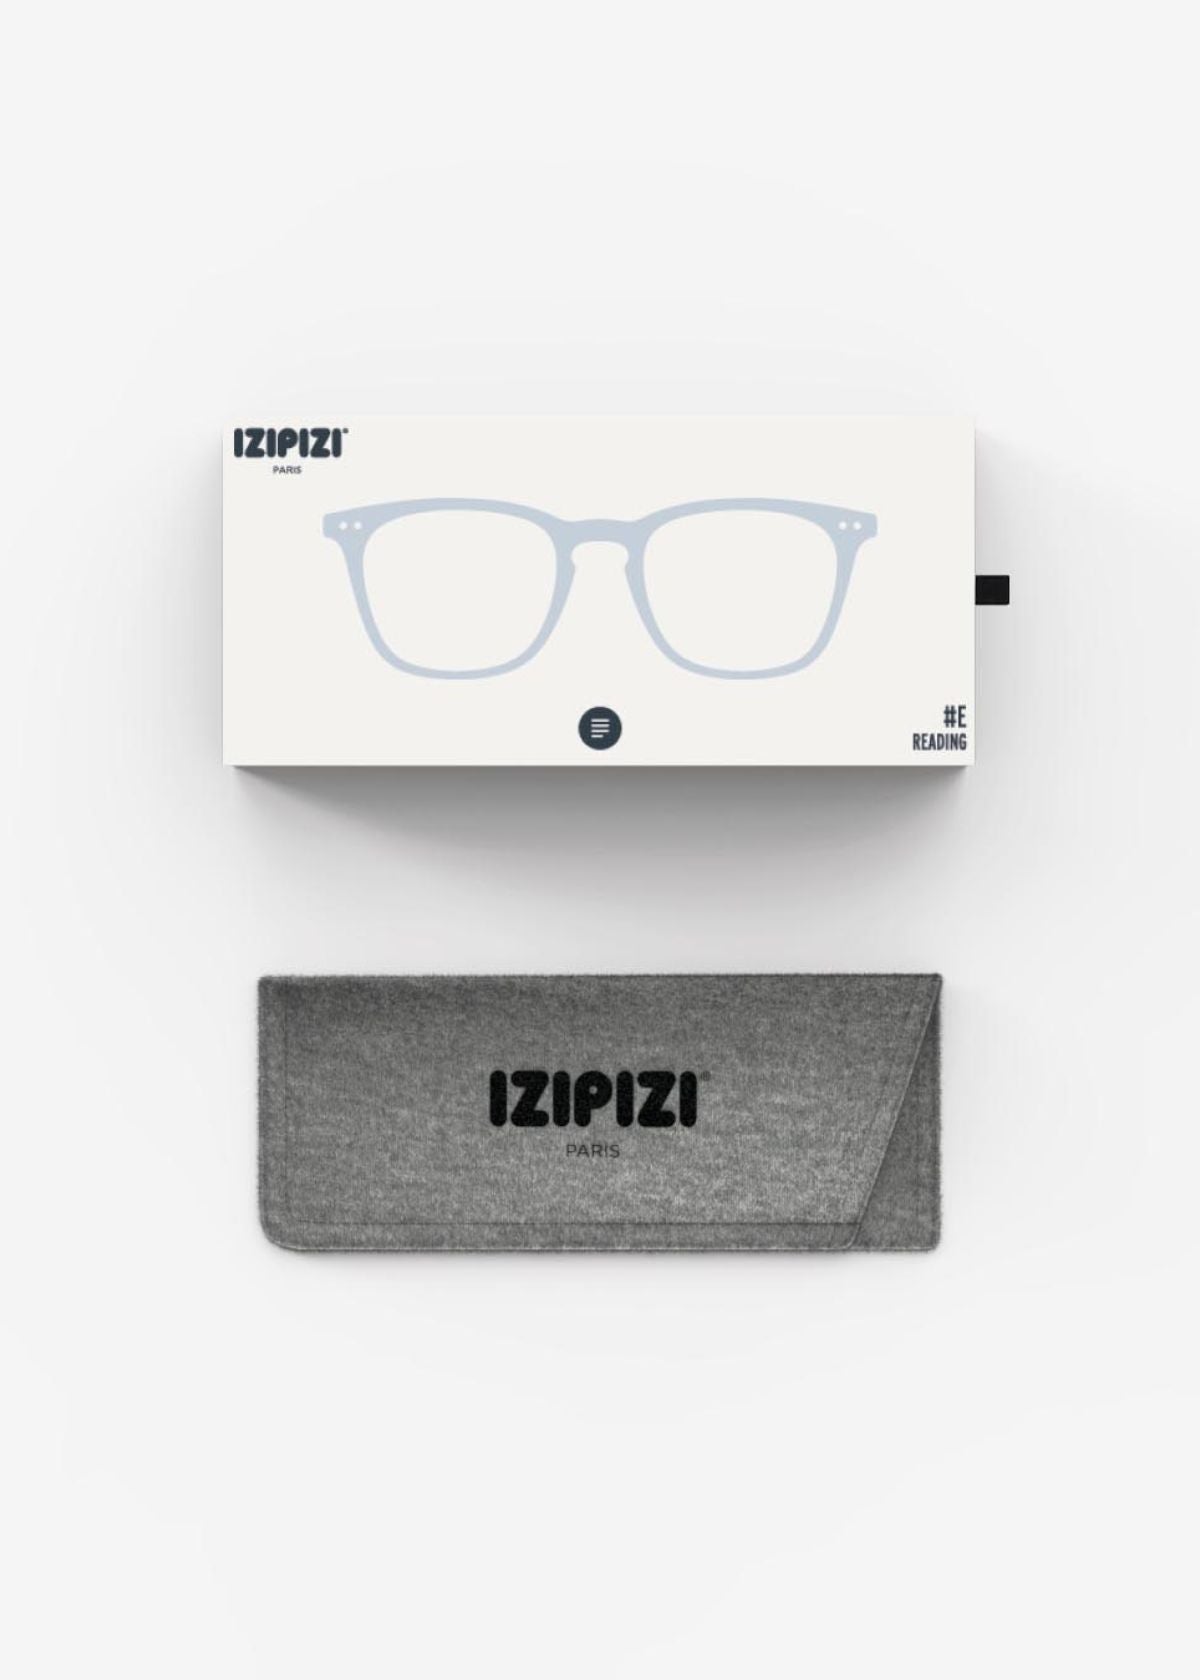 IZIPIZI Trapezium Shaped Reading Glasses #E in Frozen Blue